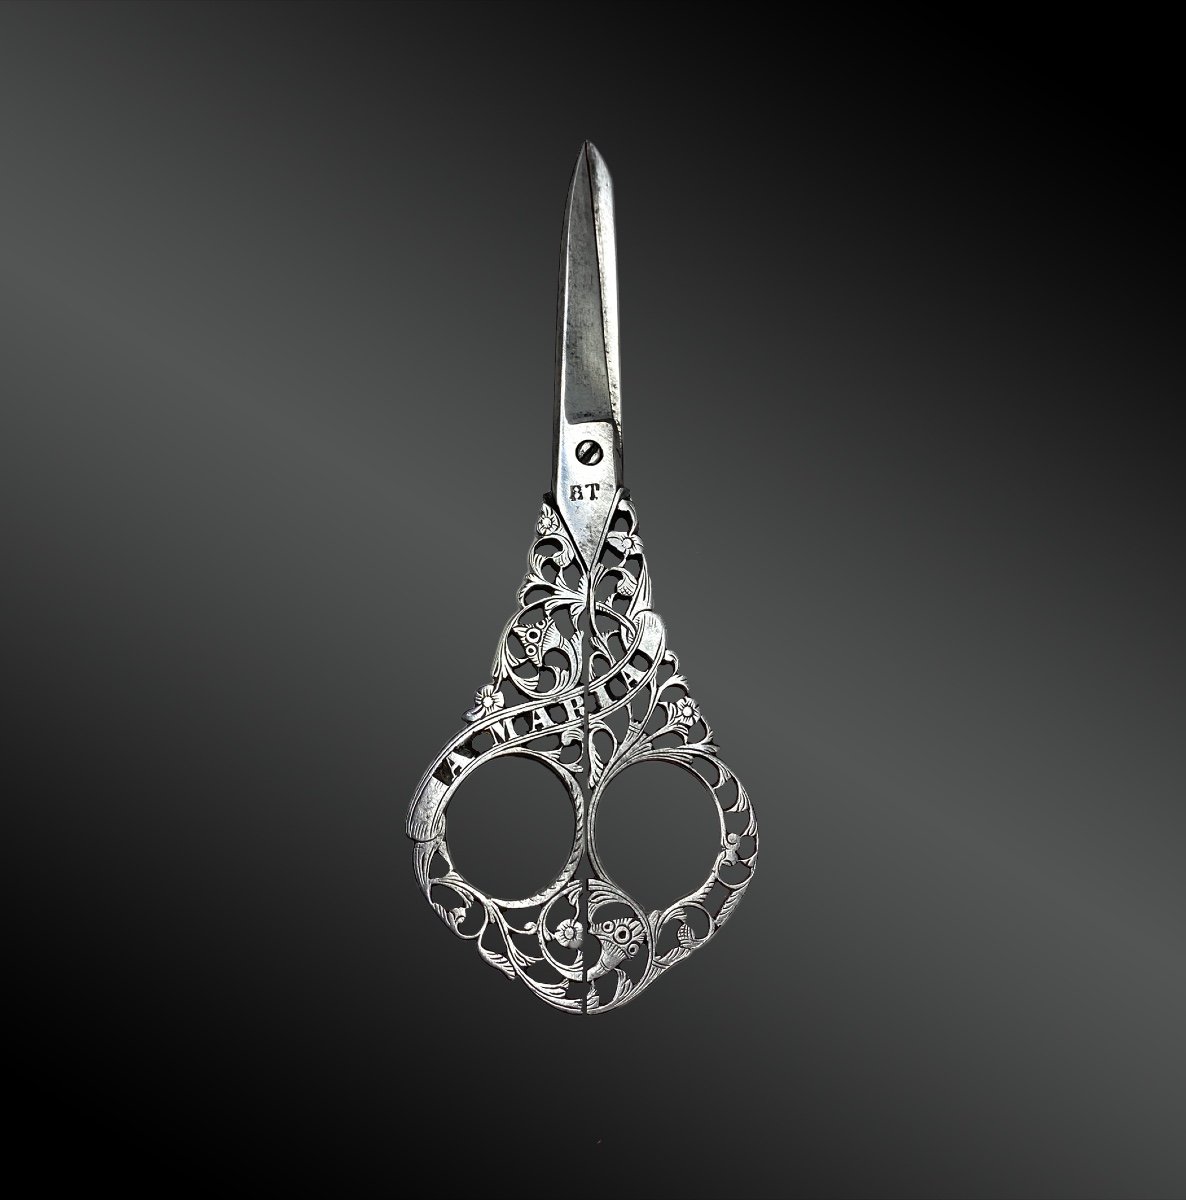 Pair Of Openwork Steel Scissors Late 19th Century